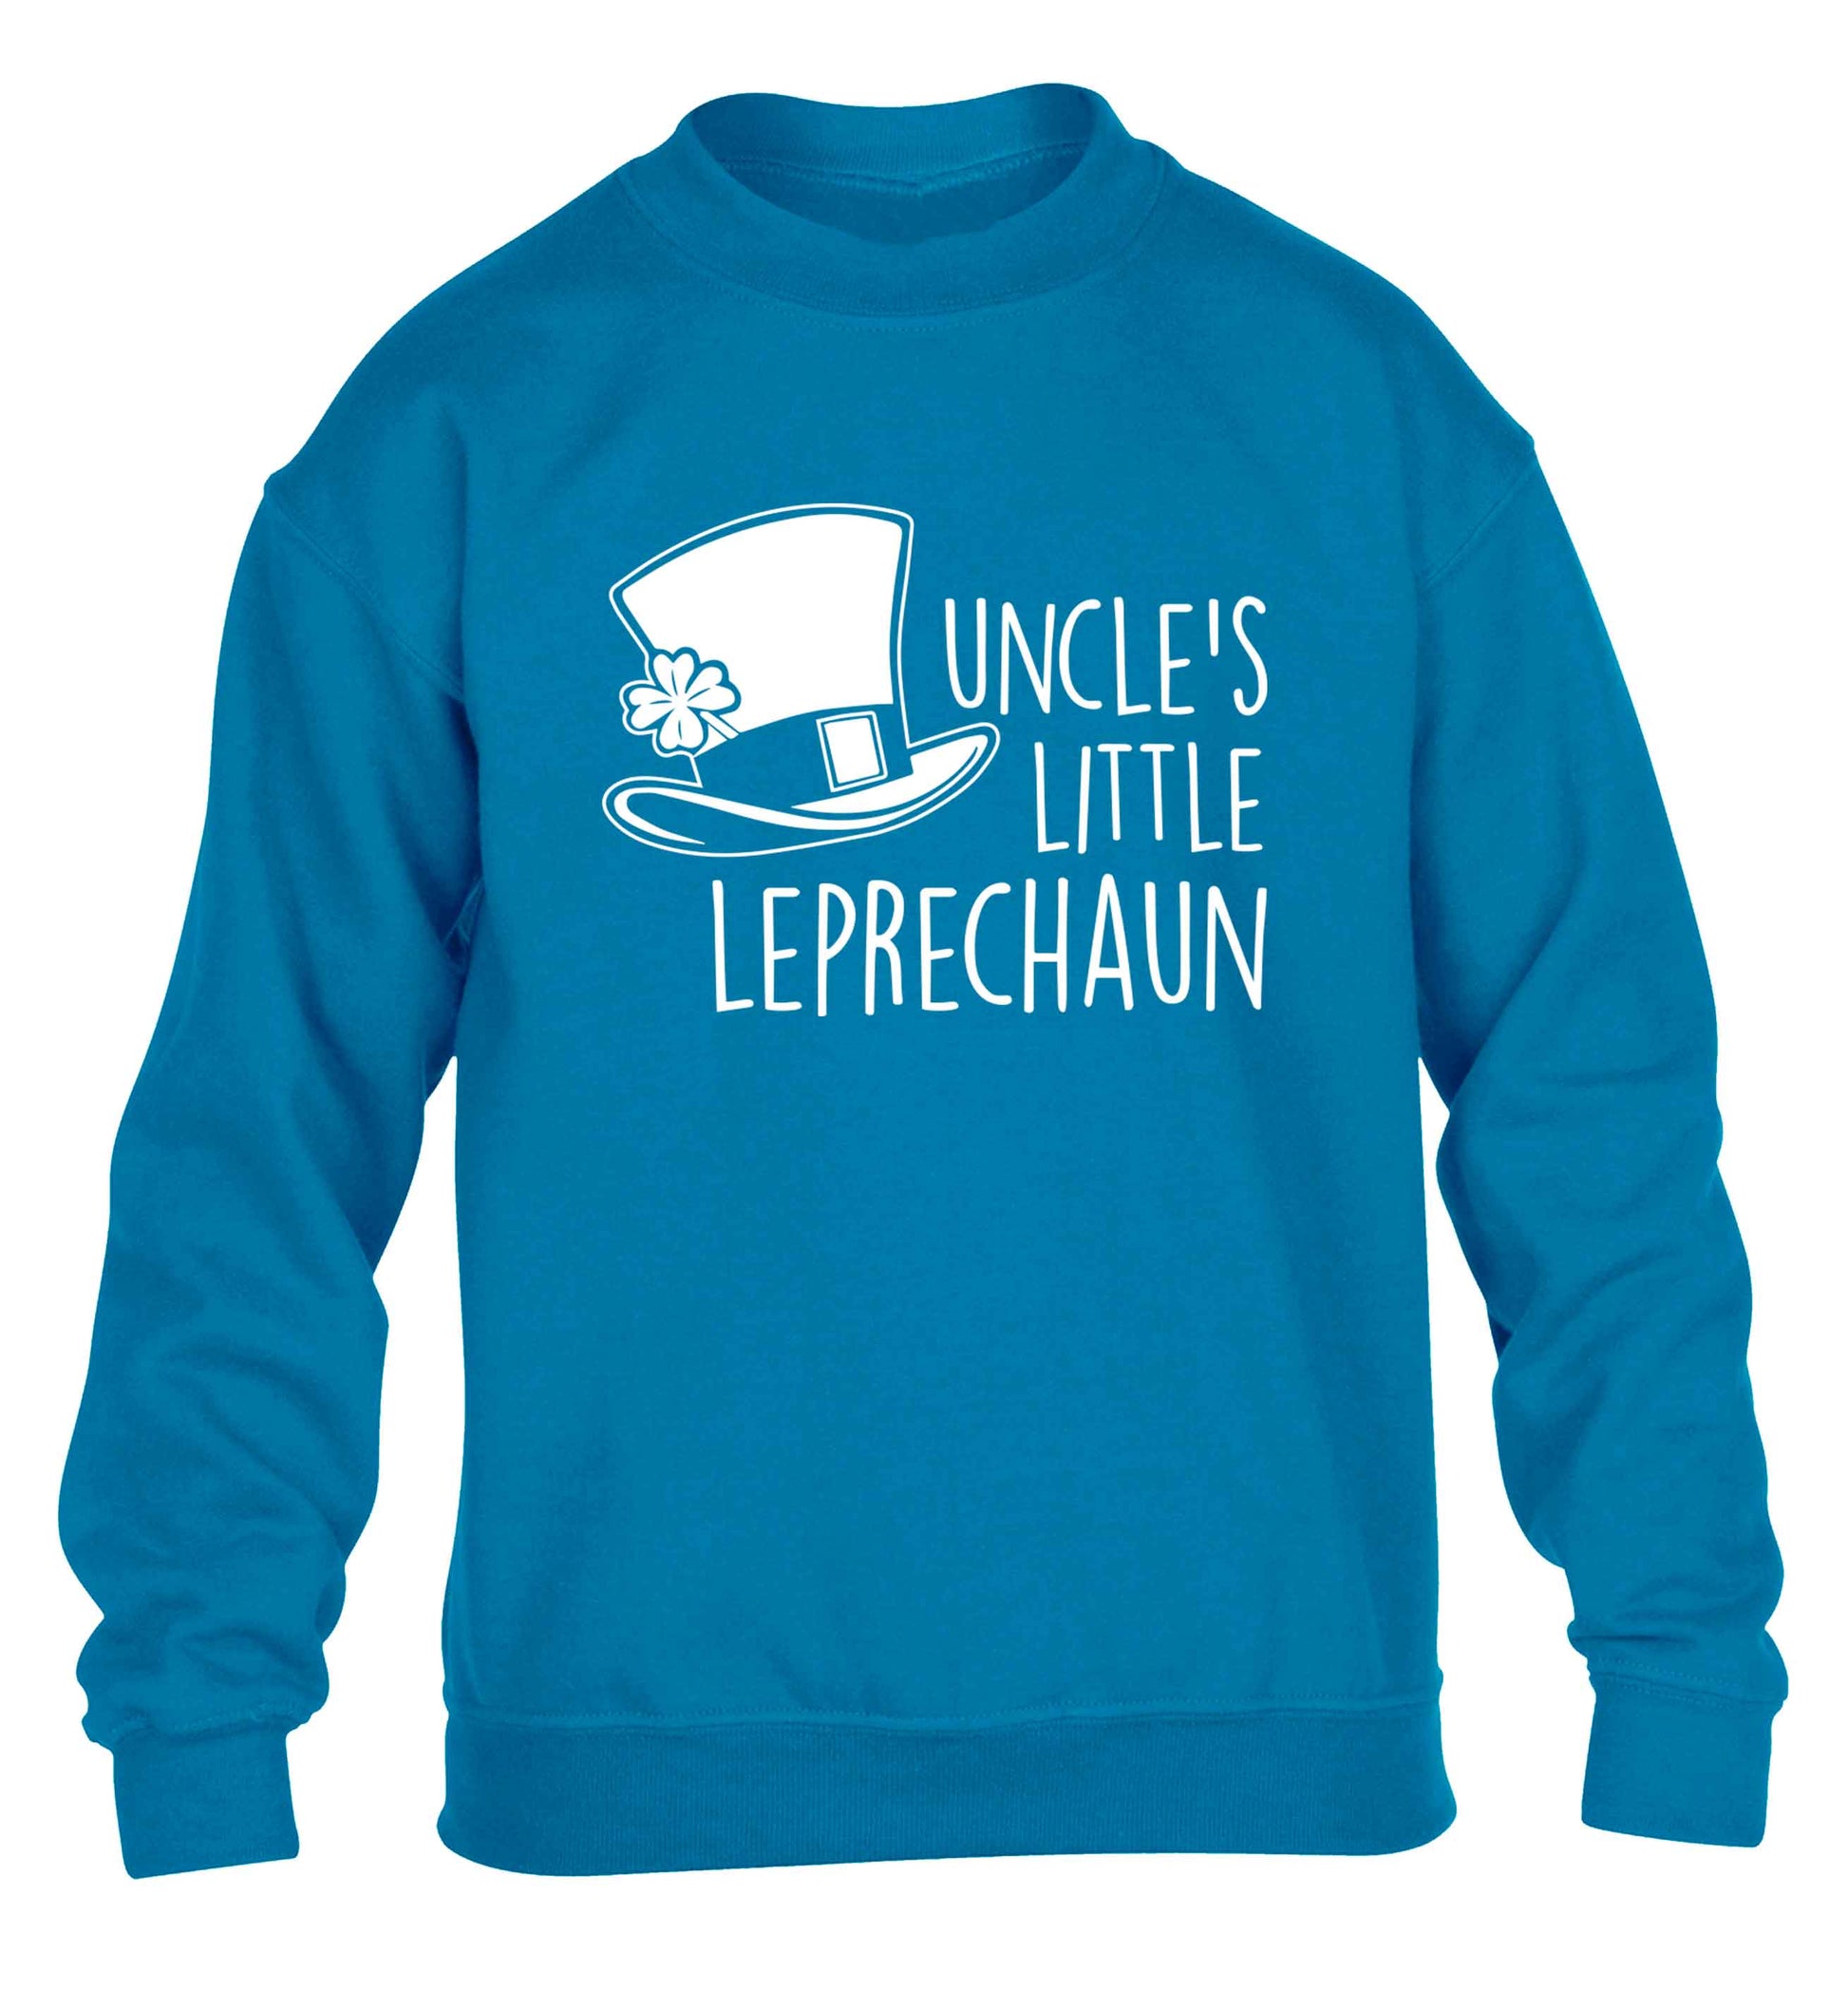 Uncles little leprechaun children's blue sweater 12-13 Years